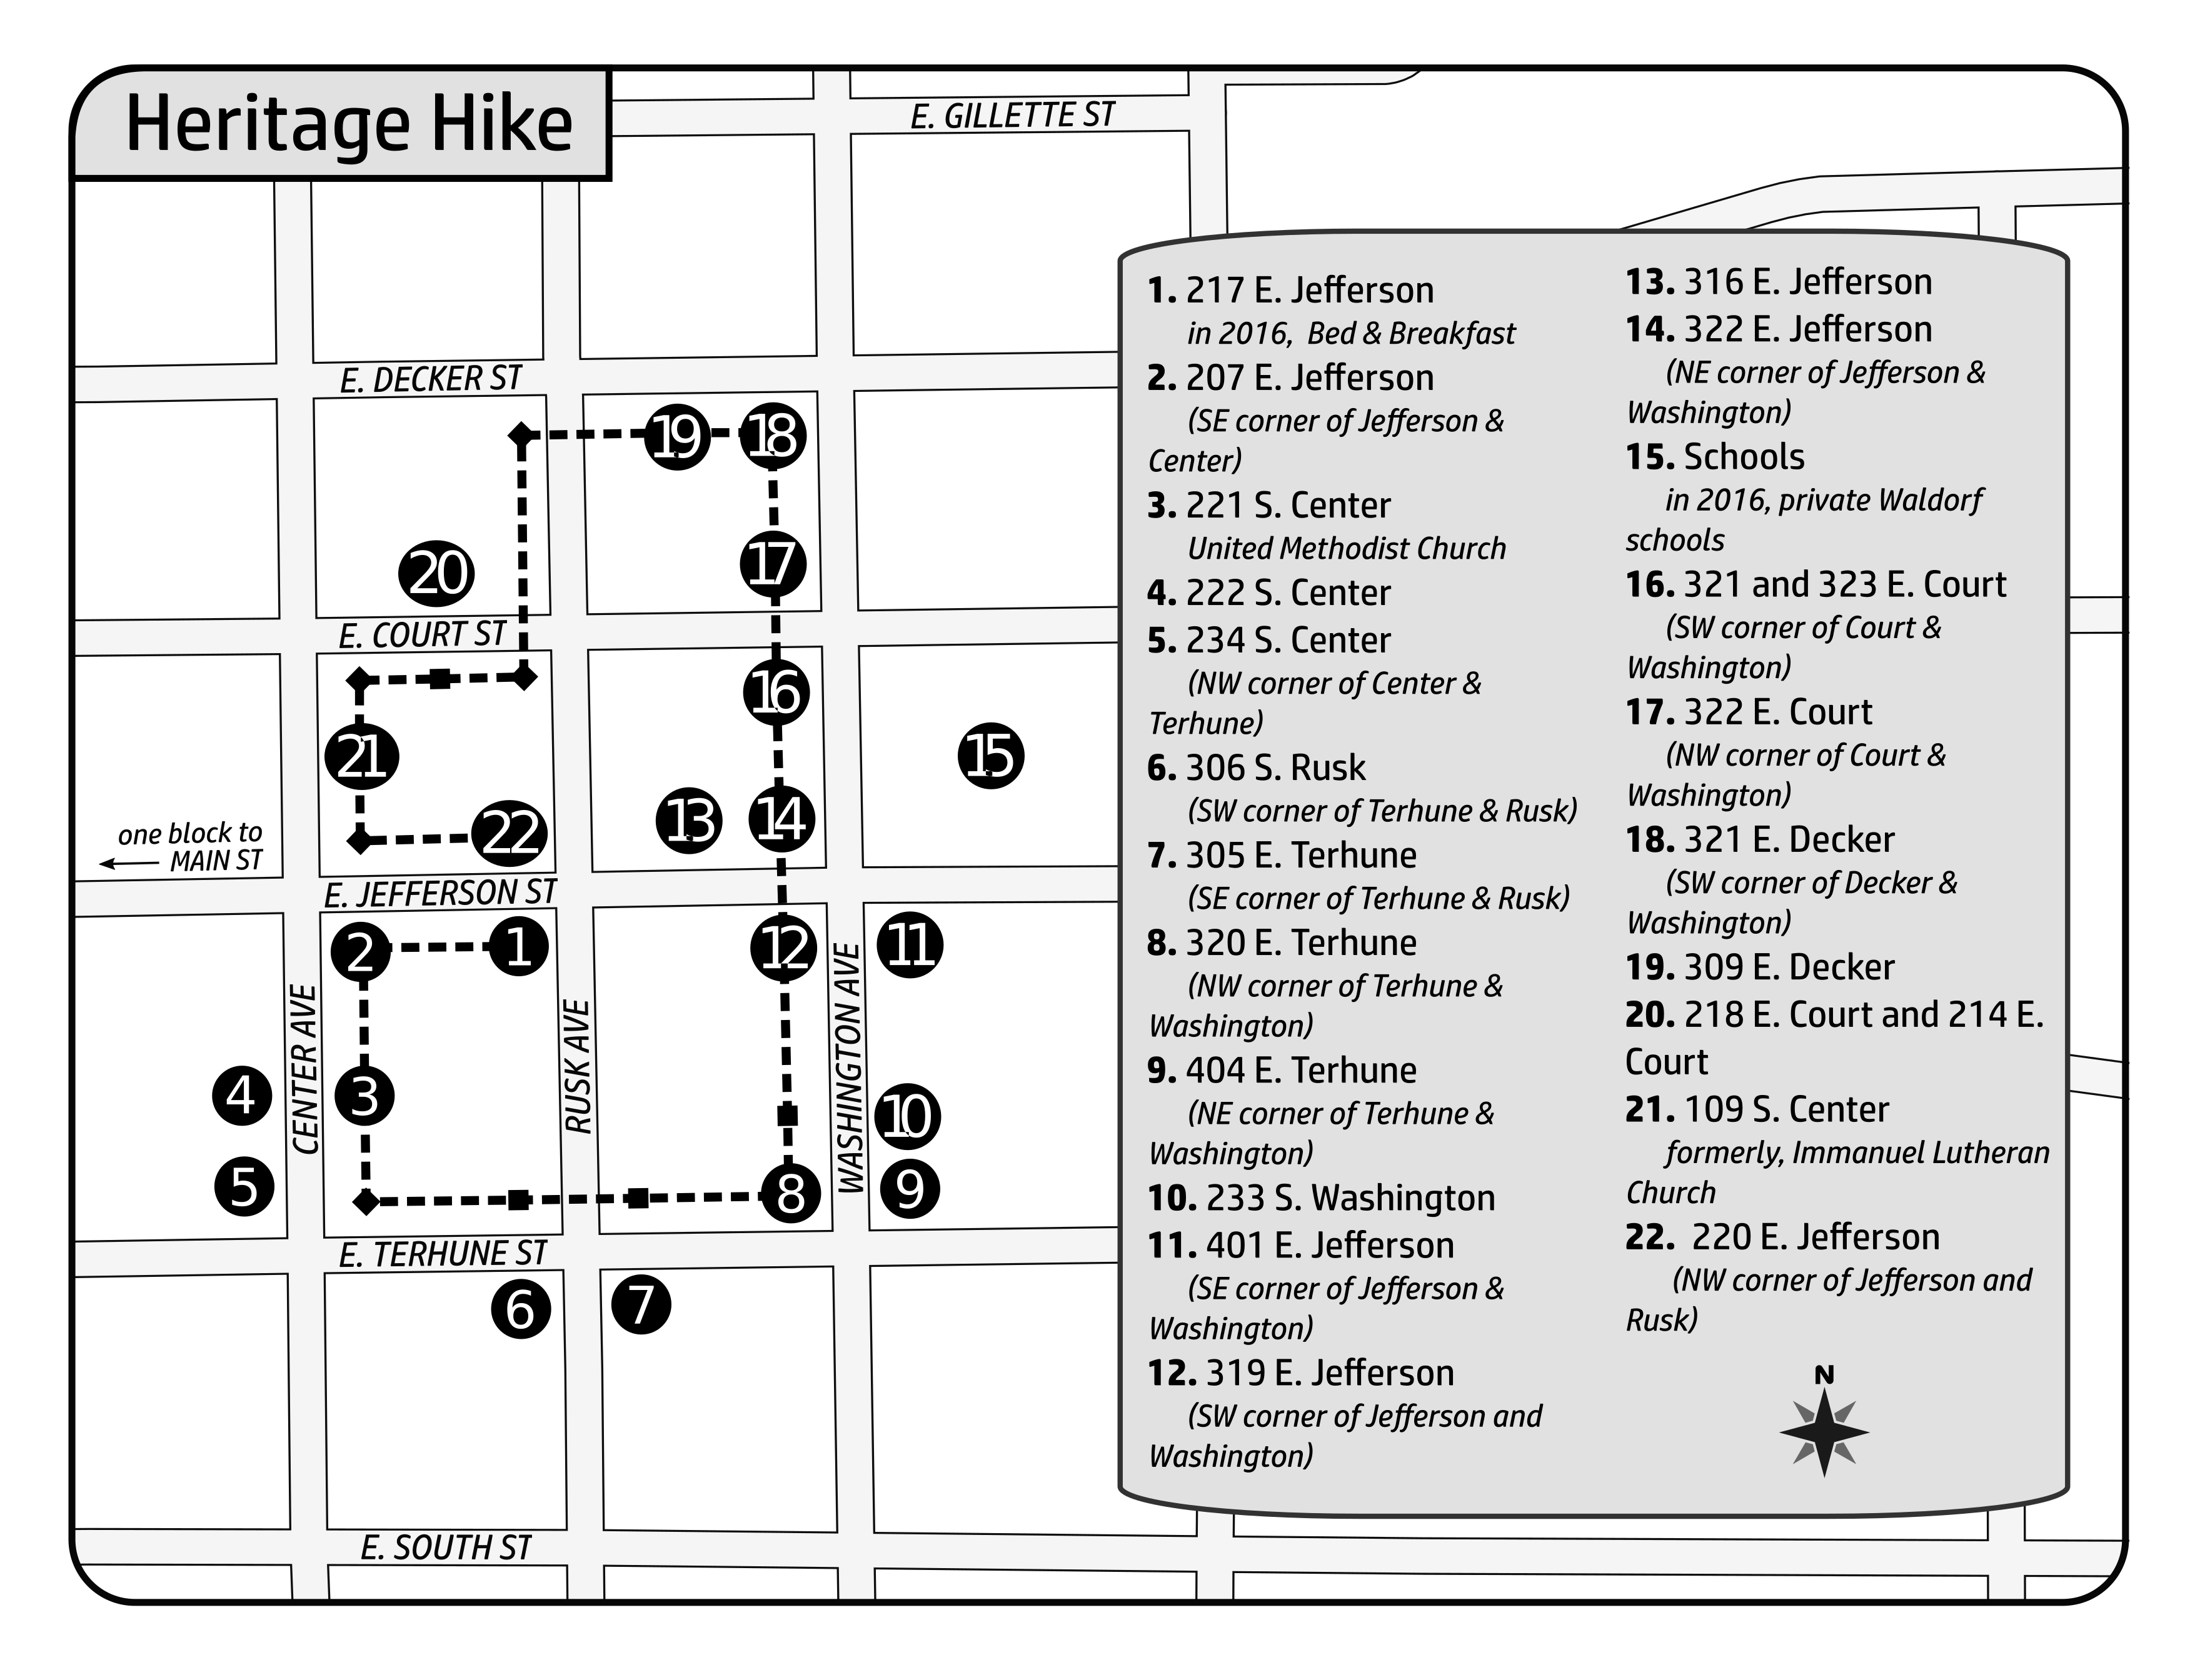 Heritage Hike map